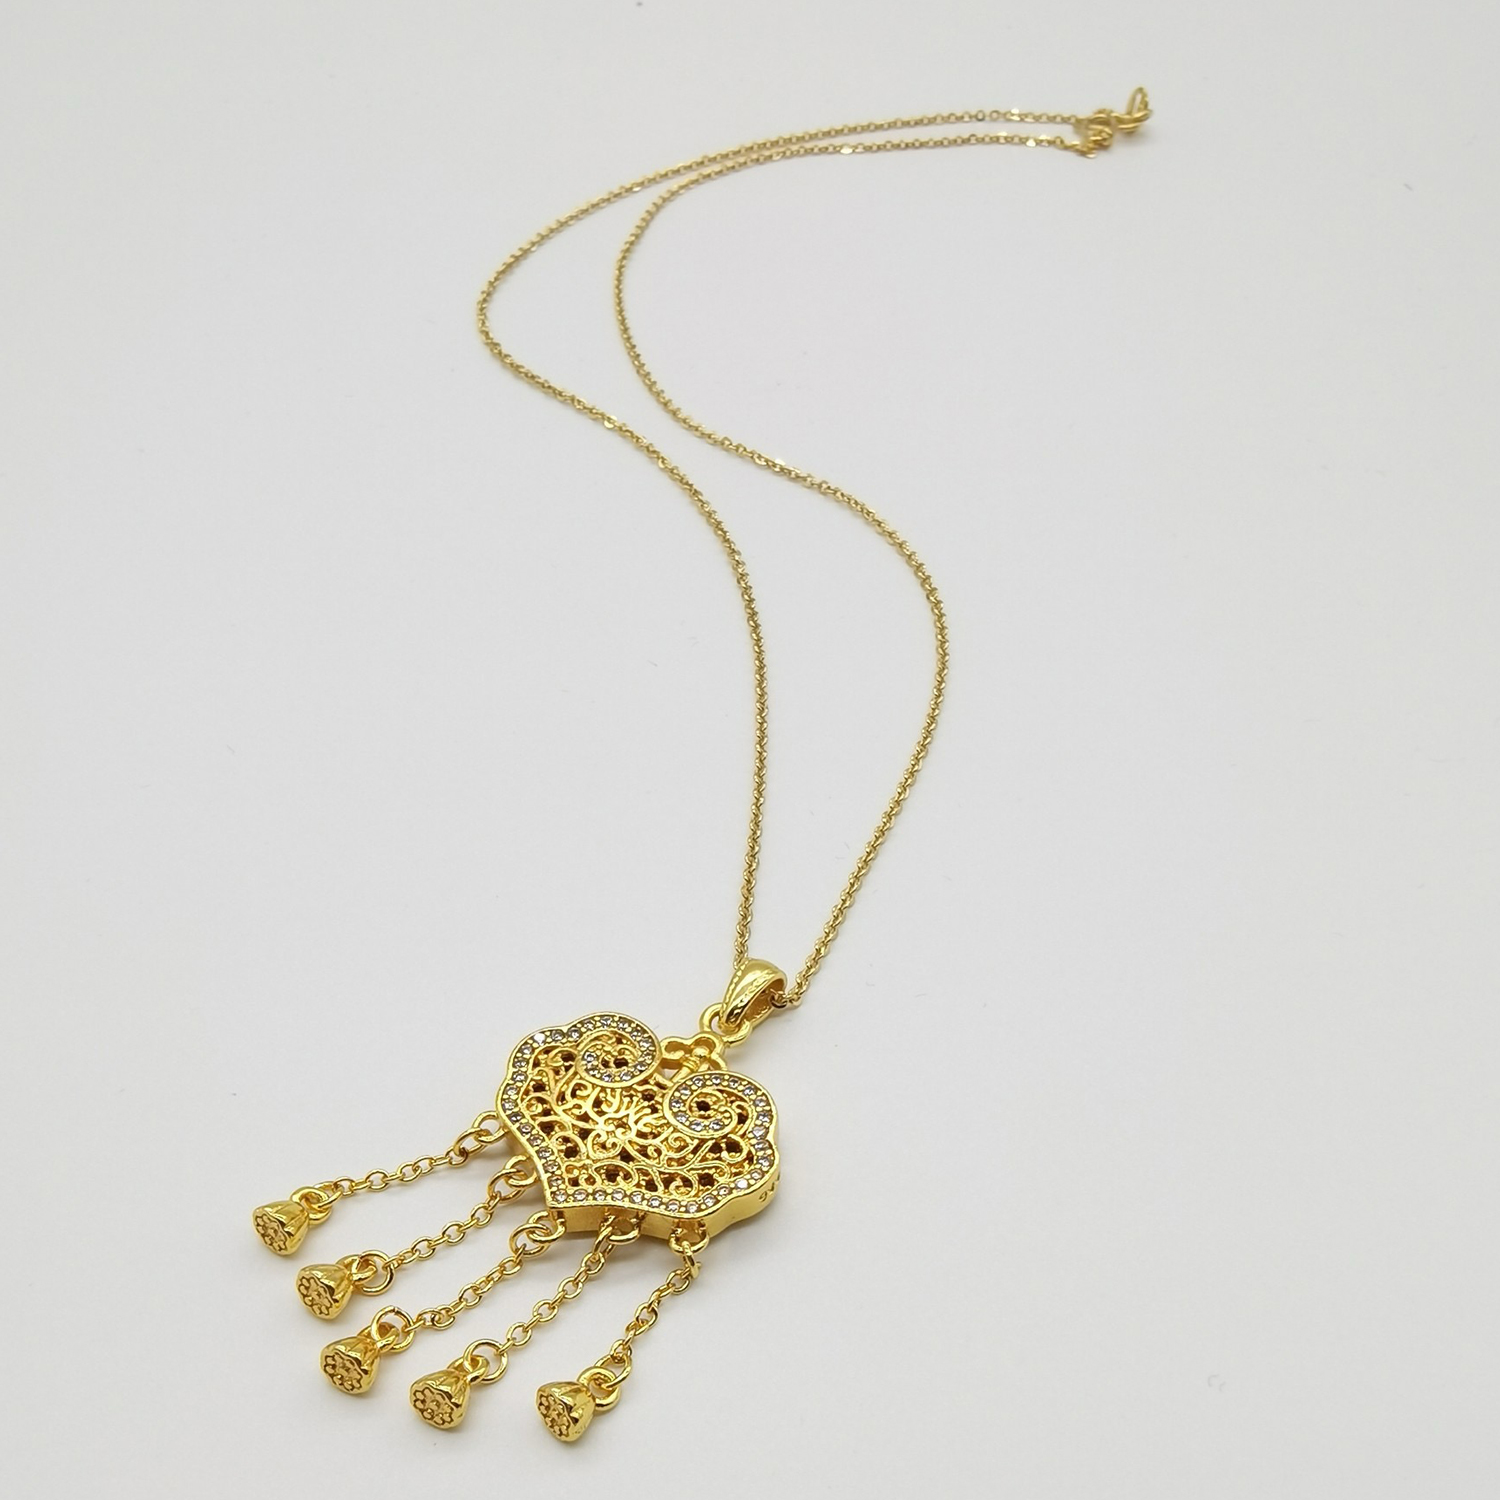 Alluvial gold vacuum electroplating 24K gold longevity lock tassel necklace